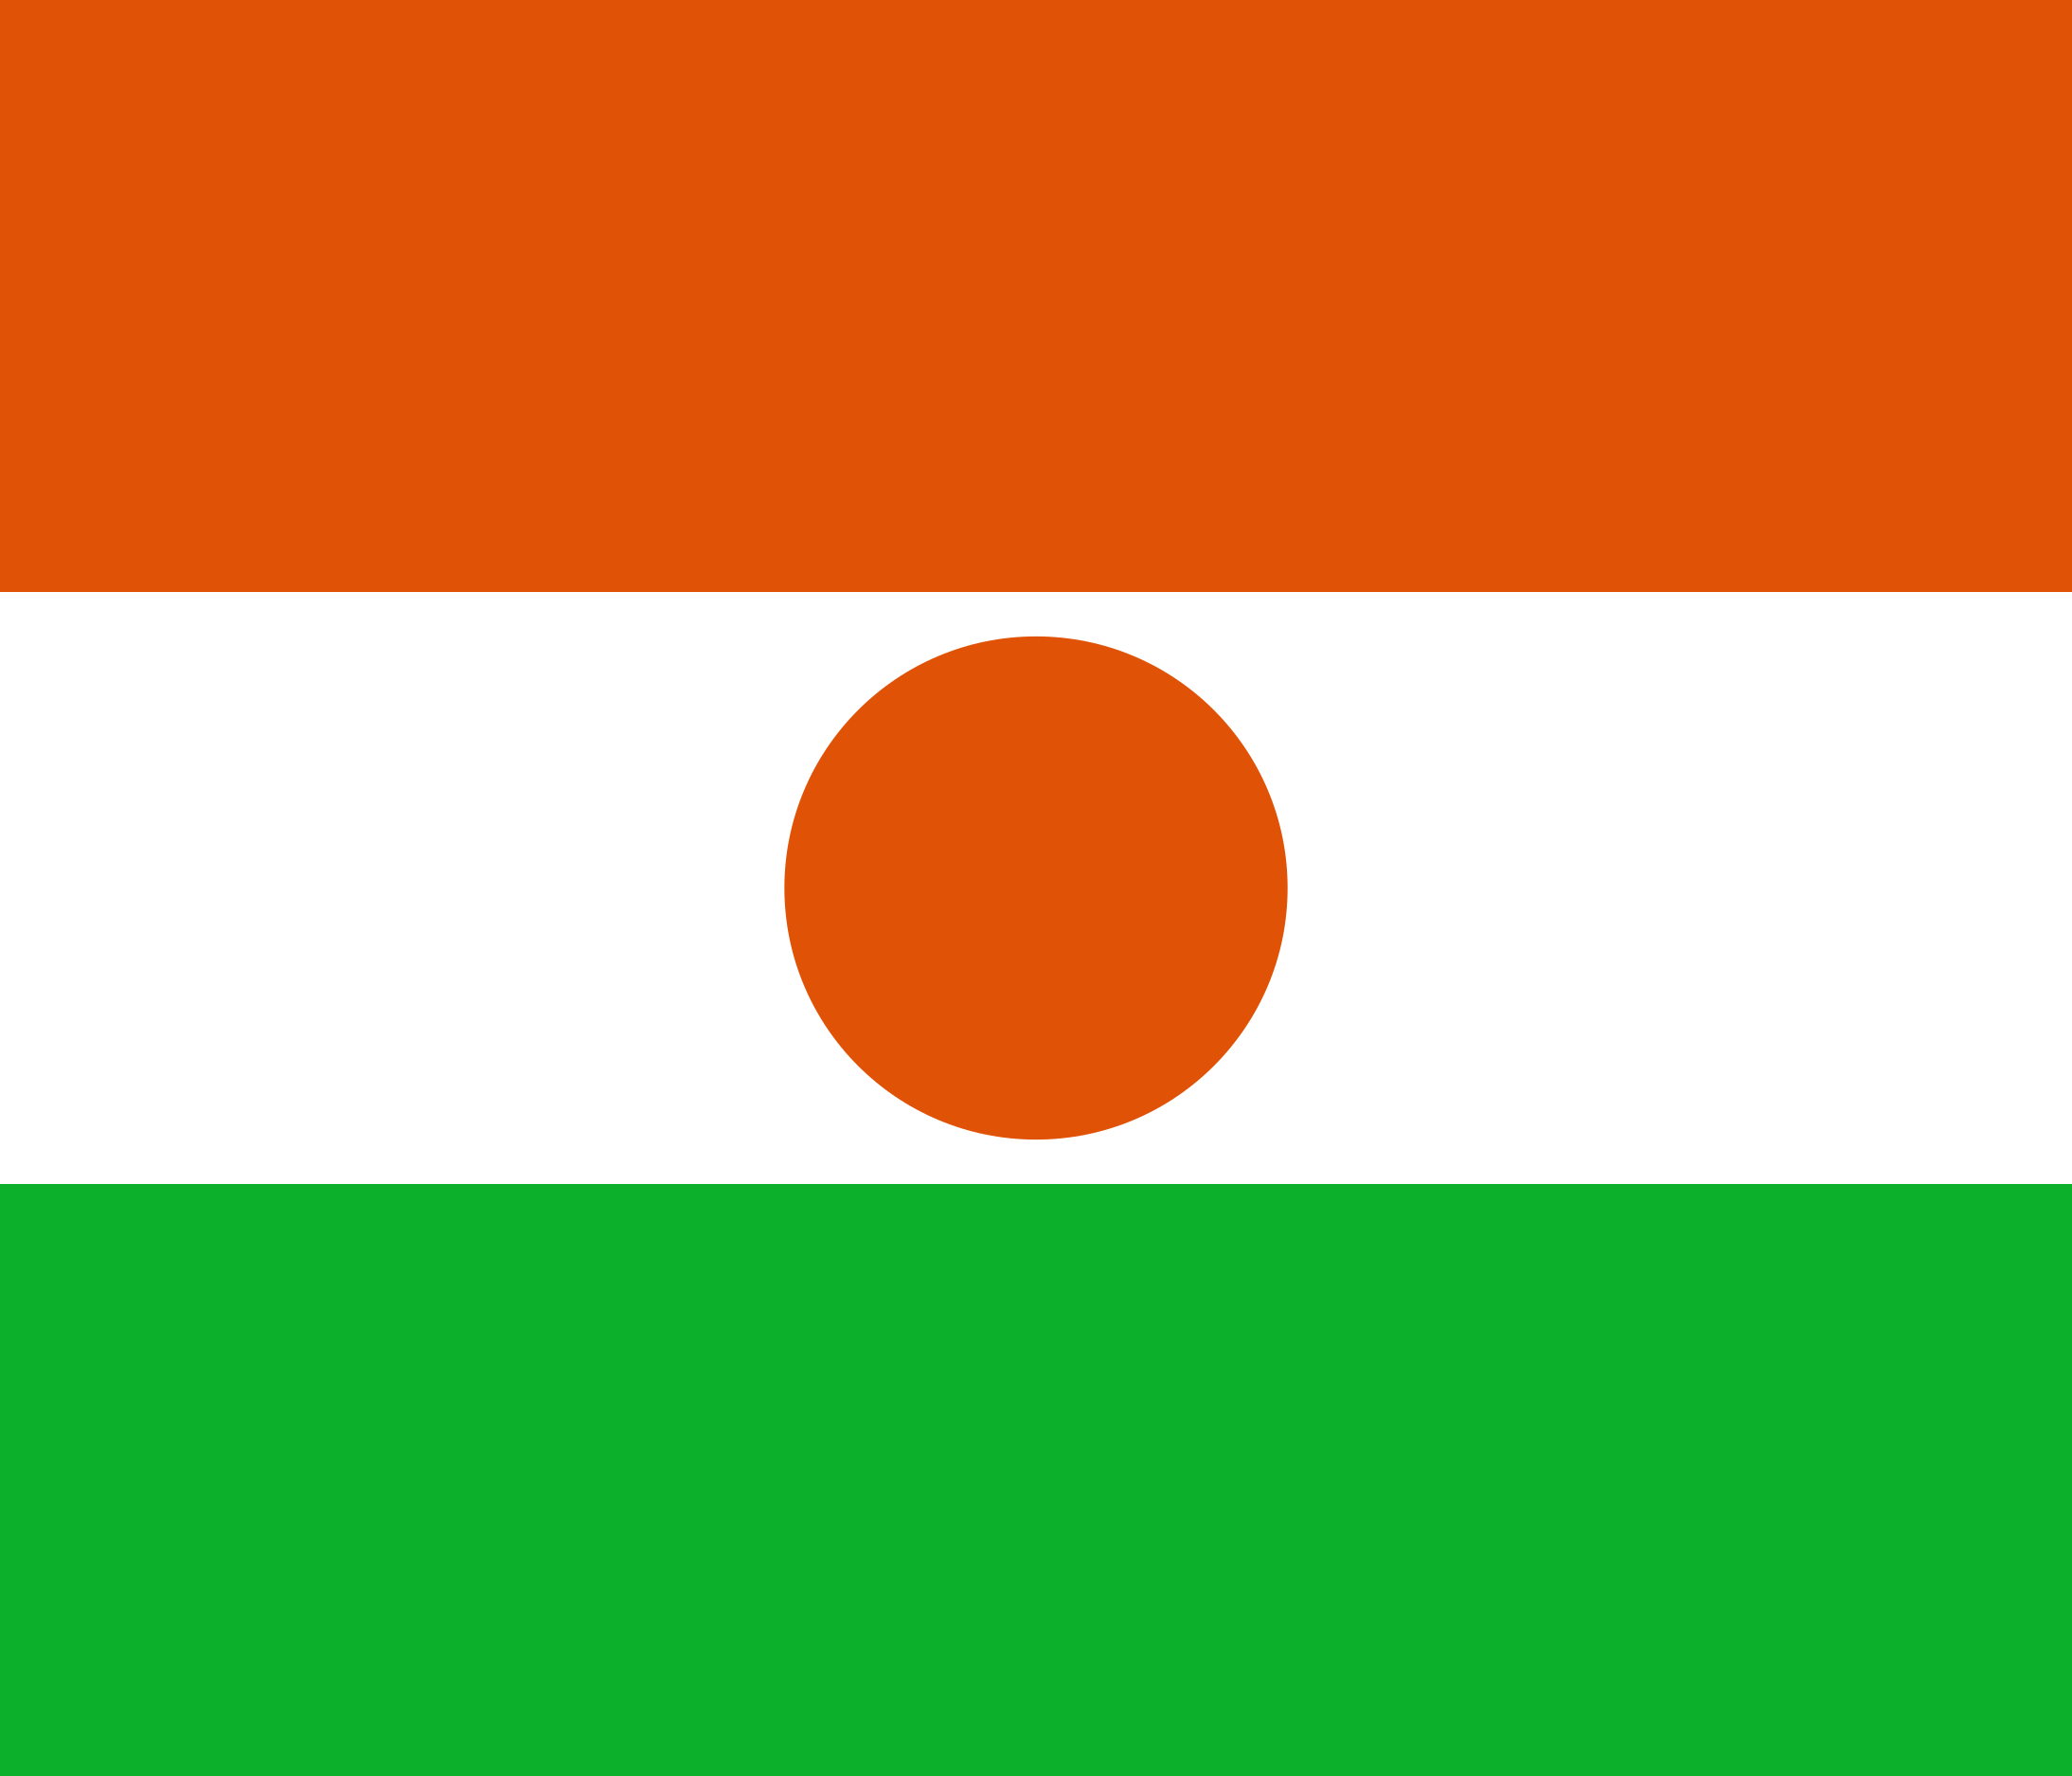 Free Niger Flag Documents: PDF, DOC, DOCX, HTML & More!